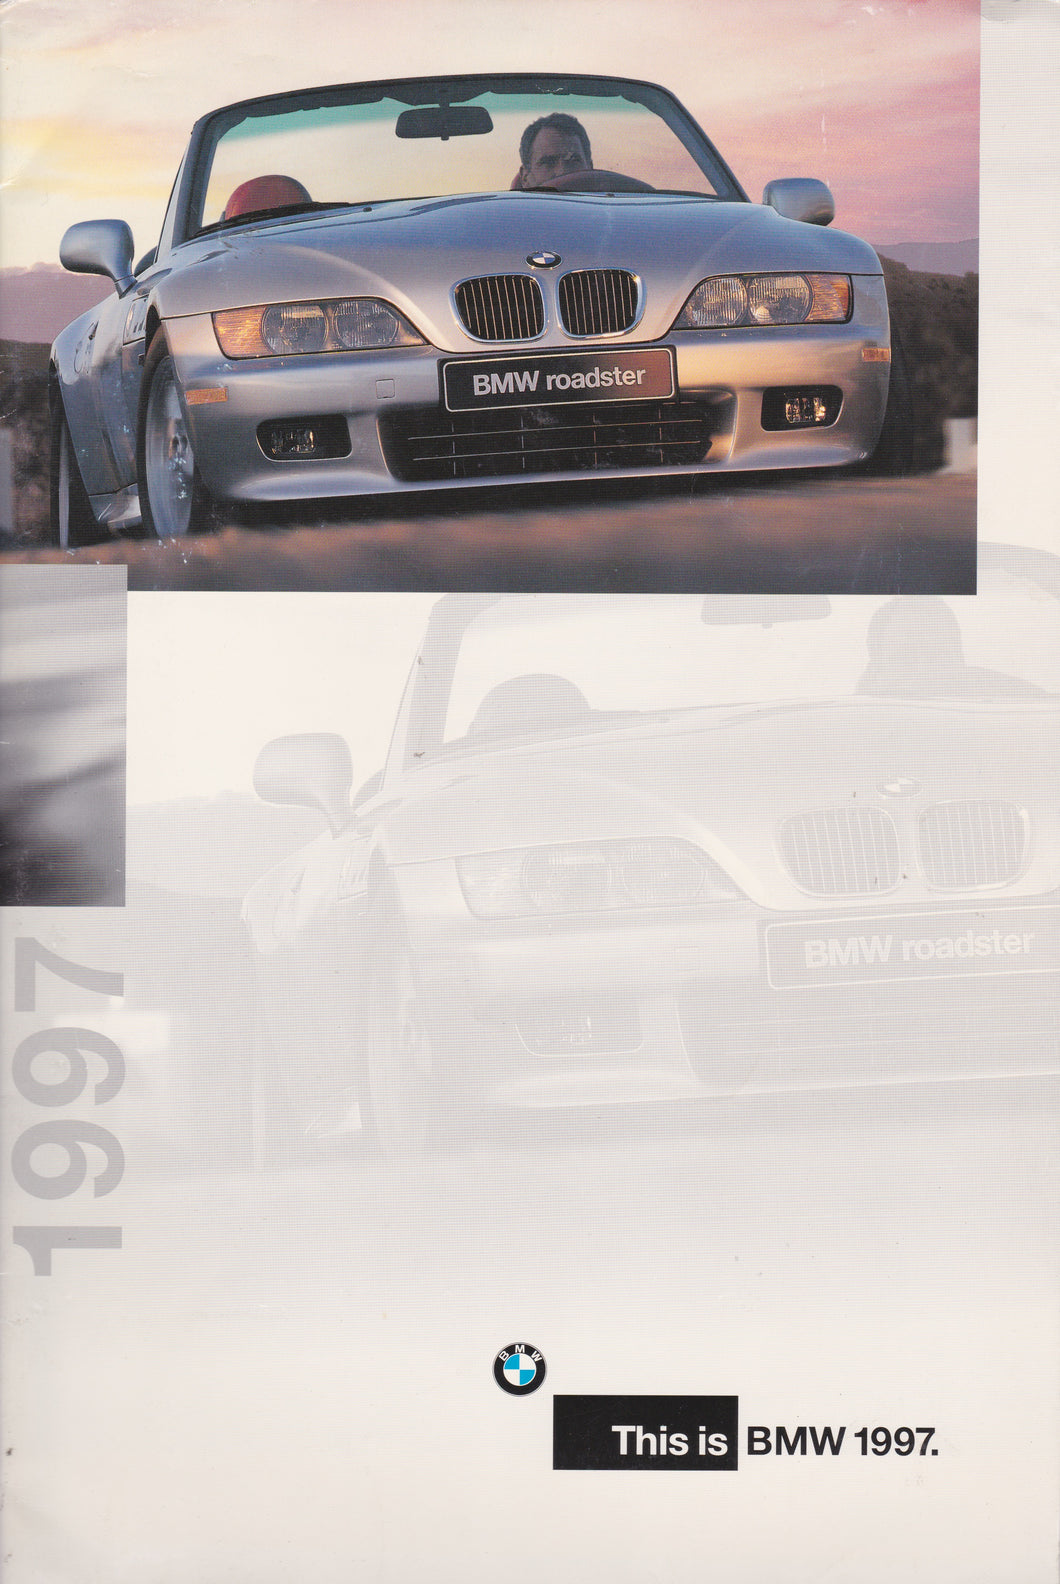 Brochure - This is BMW 1997 - Full Model Line Brochure